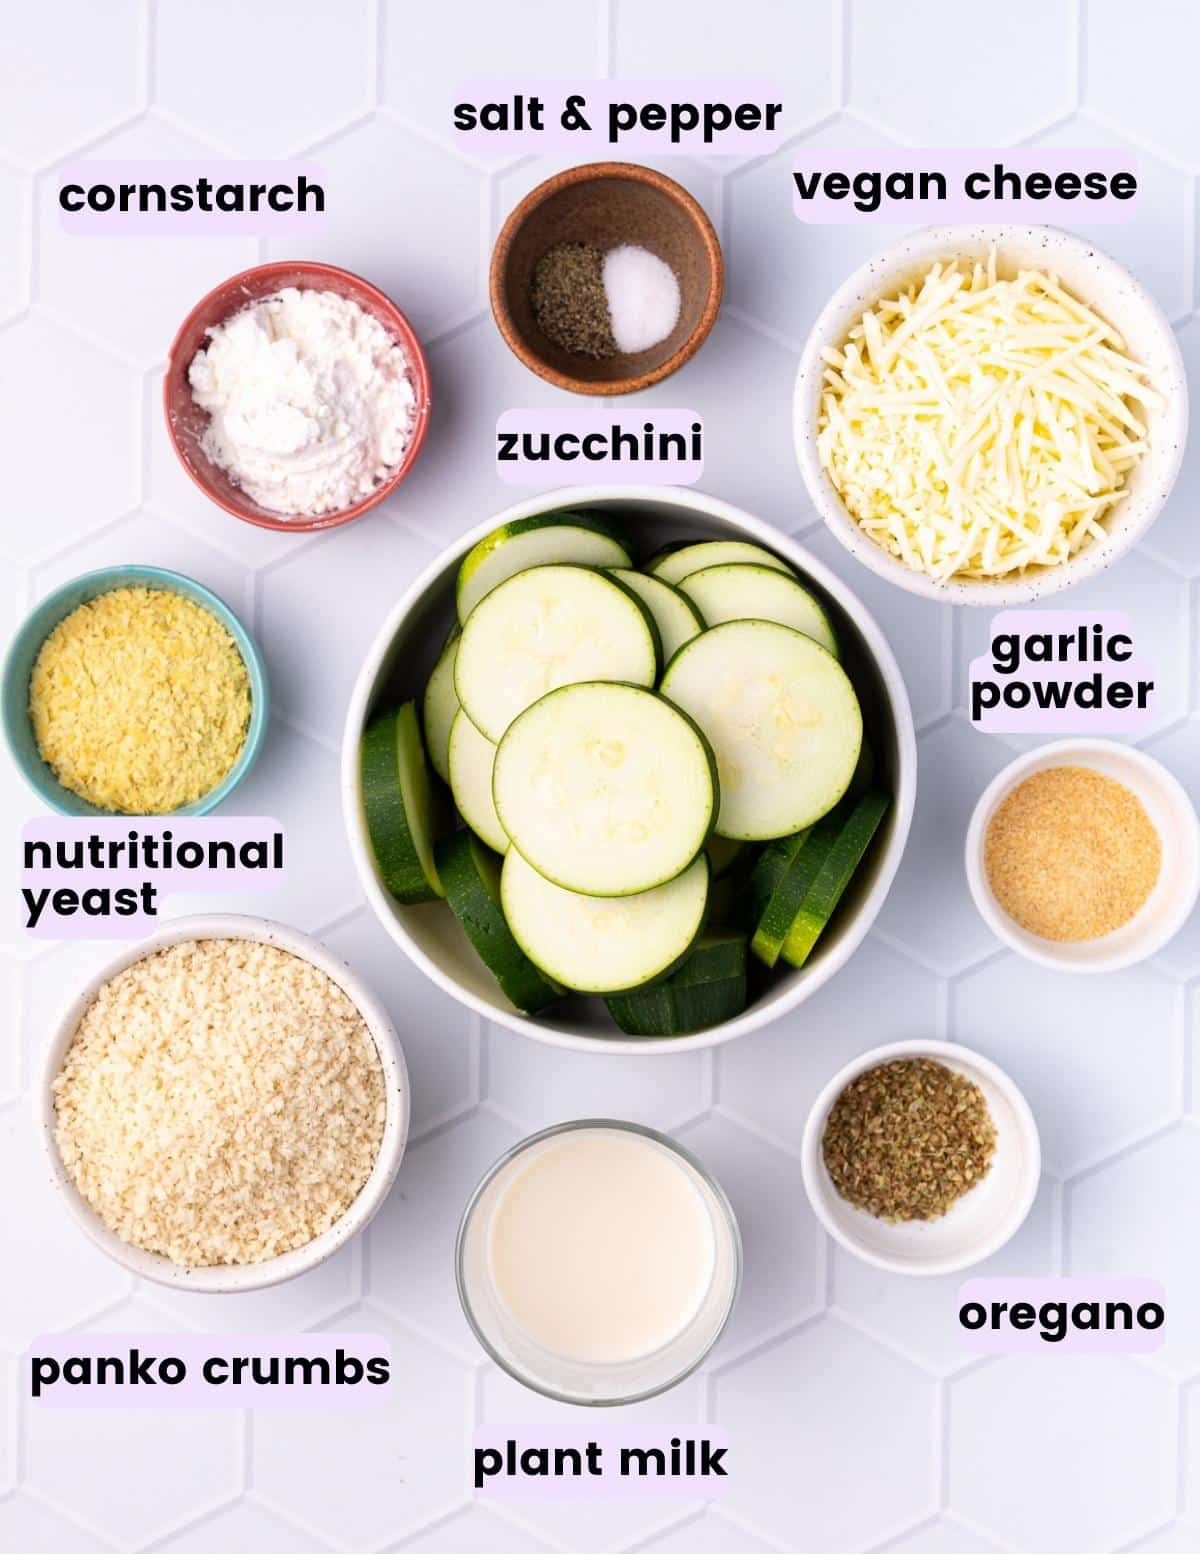 zucchini slices, cornstarch, salt, pepper, vegan cheese, garlic powder, nutritional yeast, panko crumbs, plant milk, and oregano. 